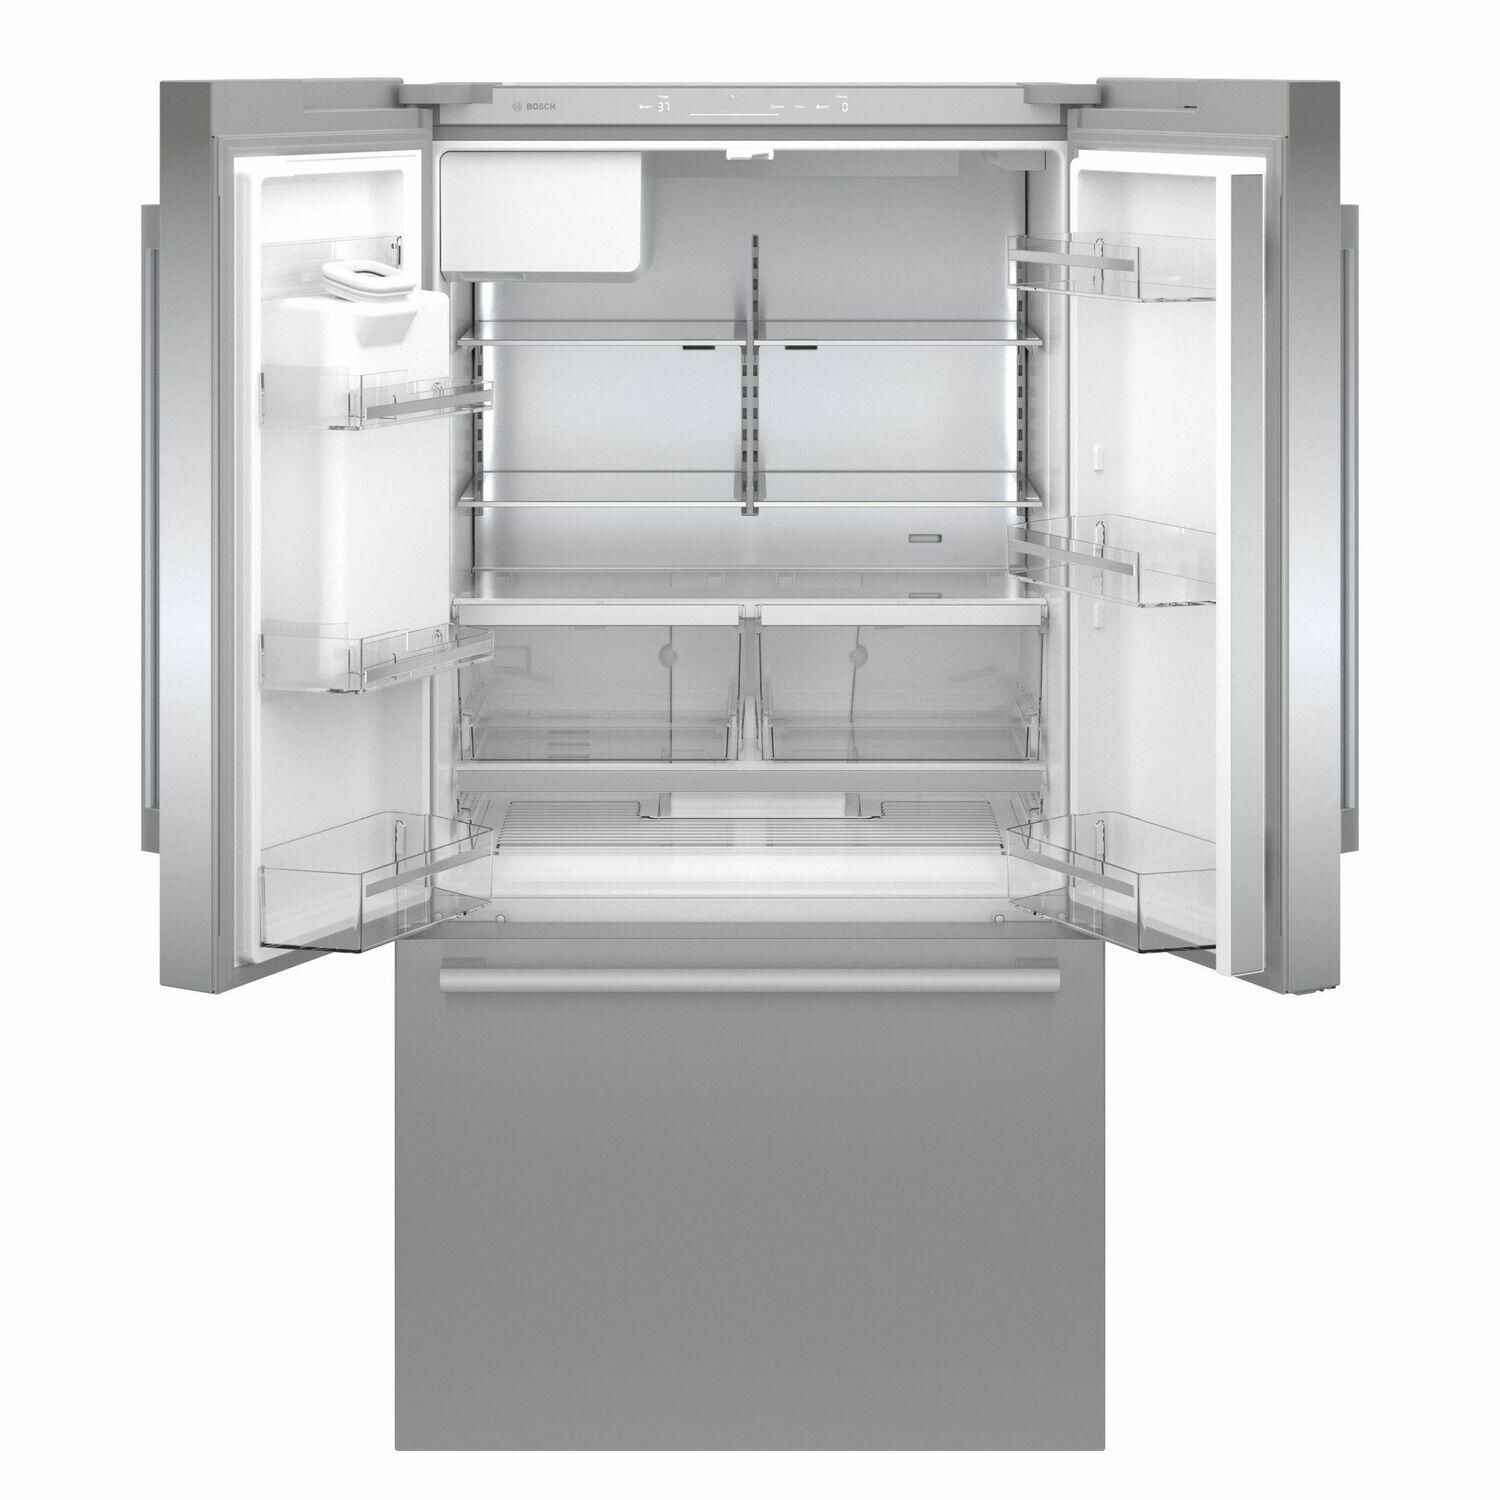 BOSCH 500 Serie | French Door Bottom Mount Refrigerator